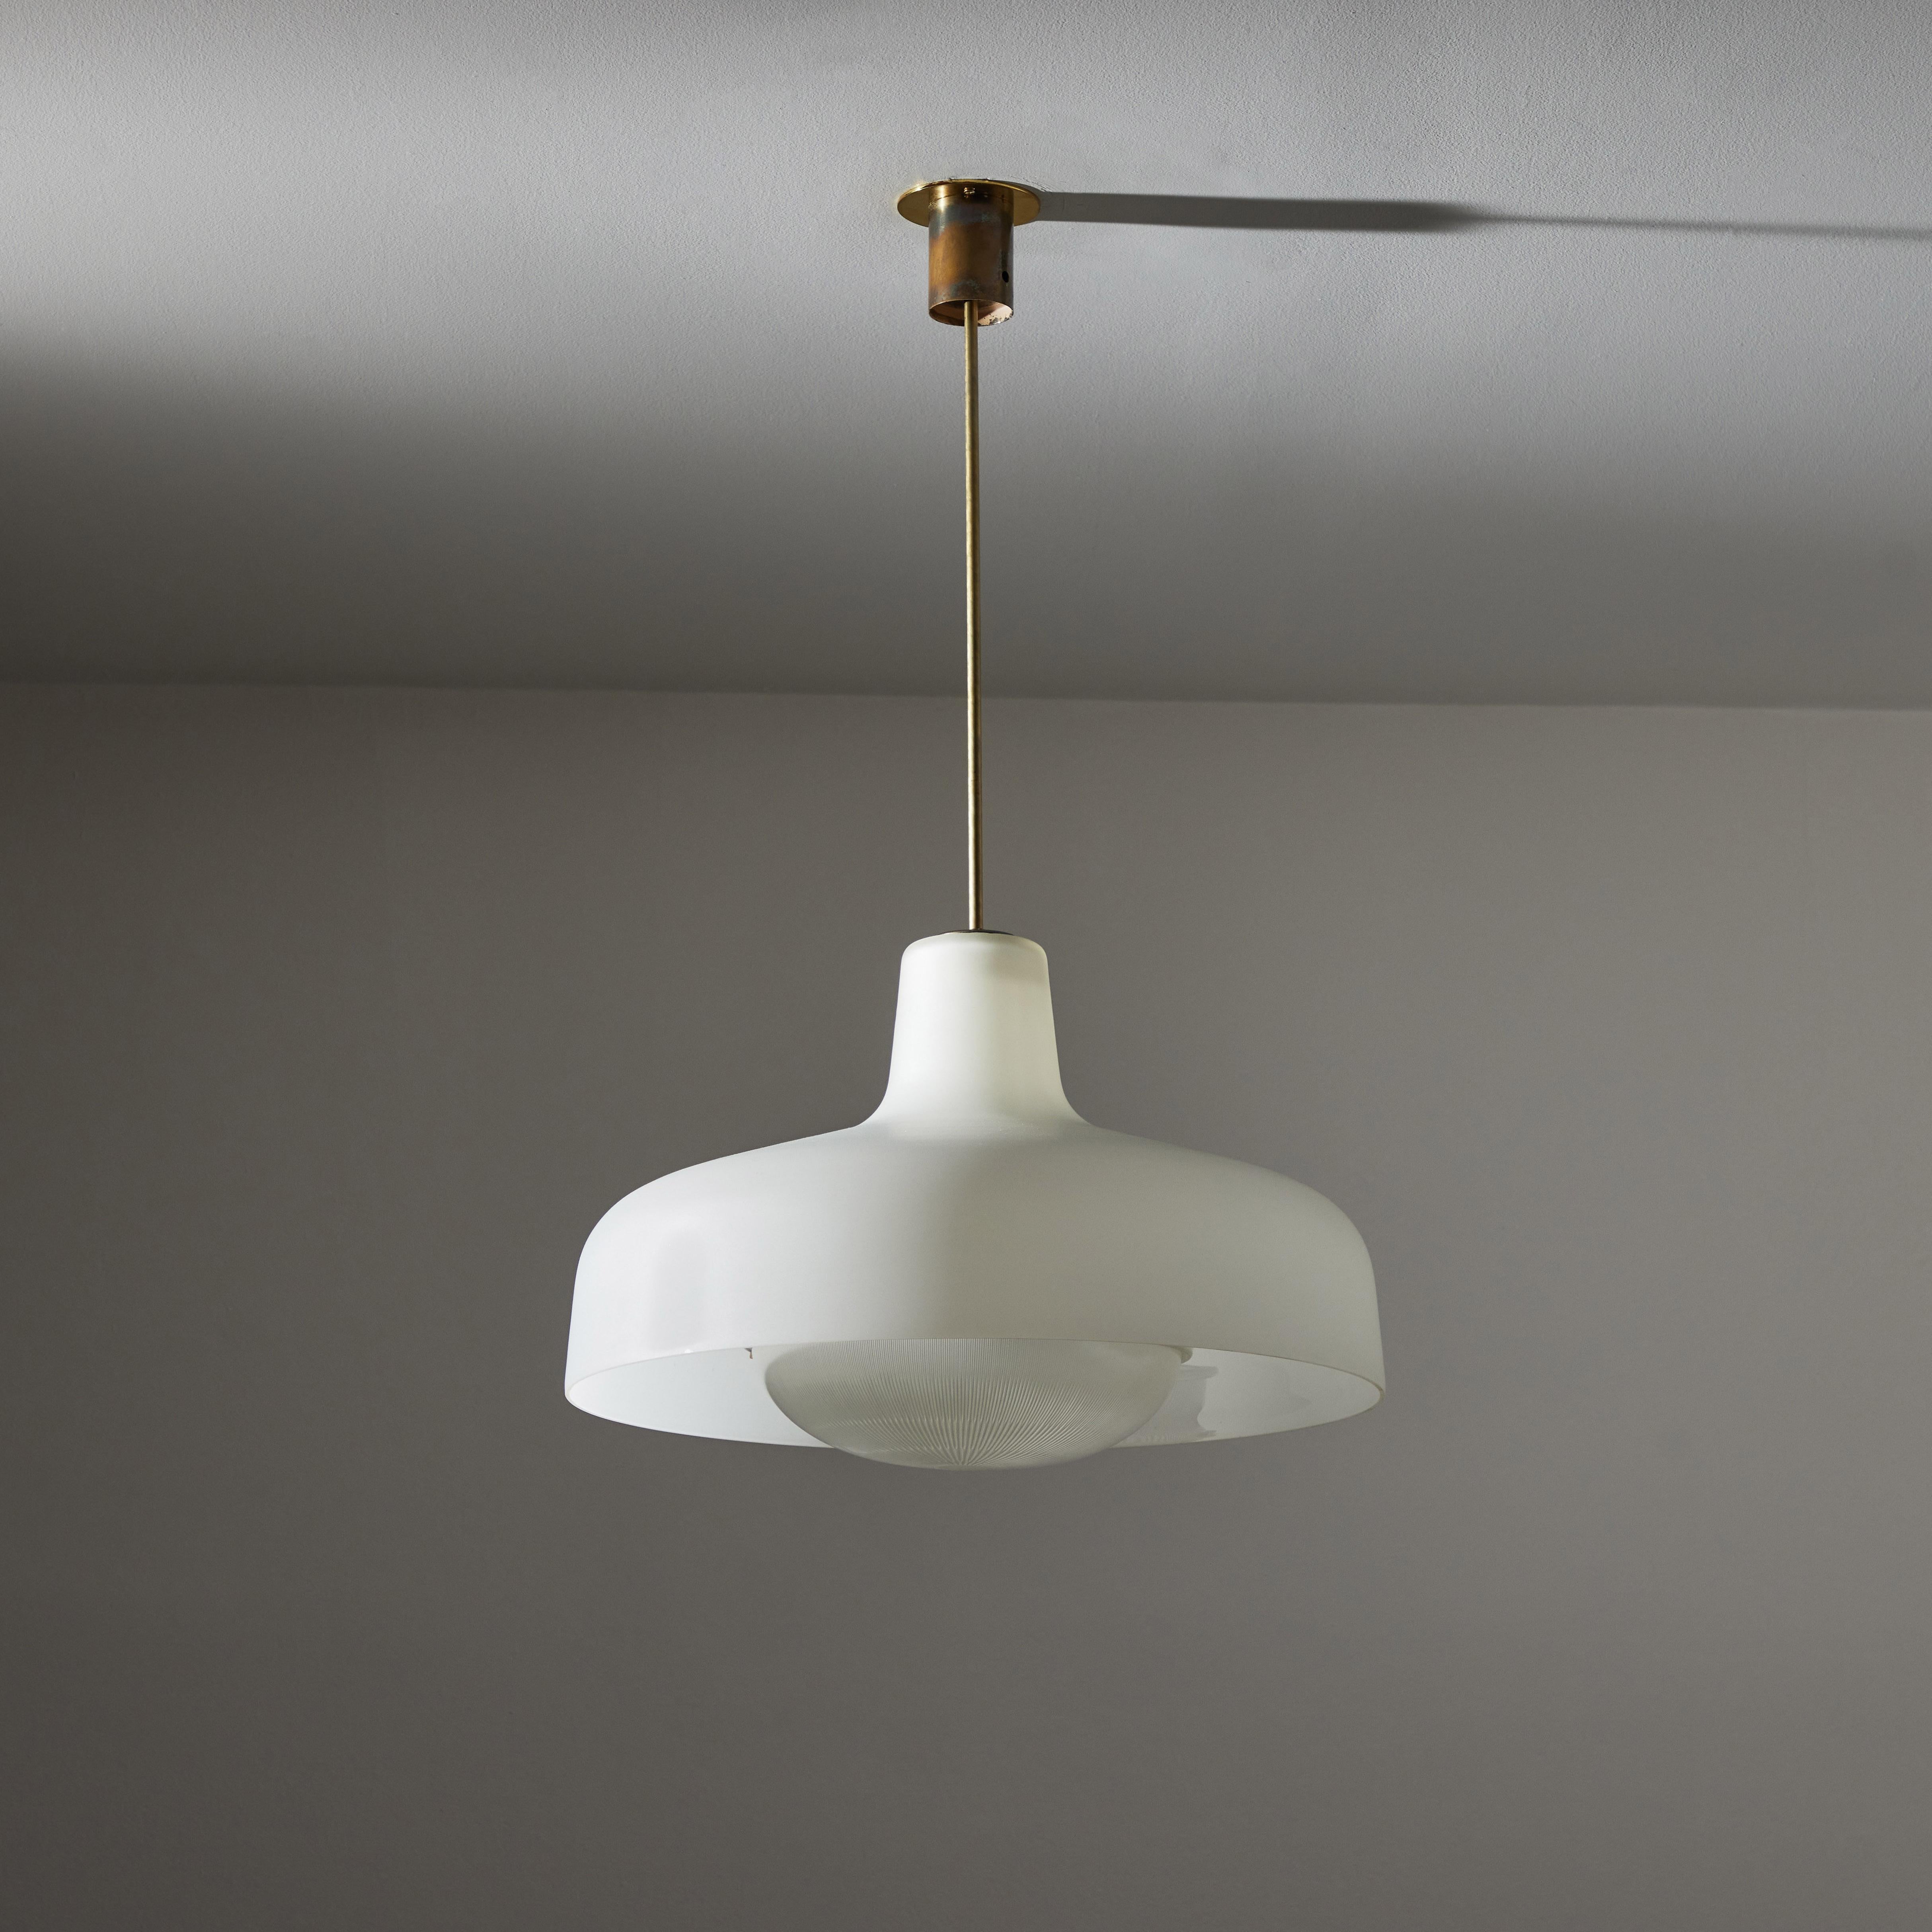 Mid-Century Modern Model LS7 “Paolina” Ceiling Light by Ignazio Gardella for Azucena